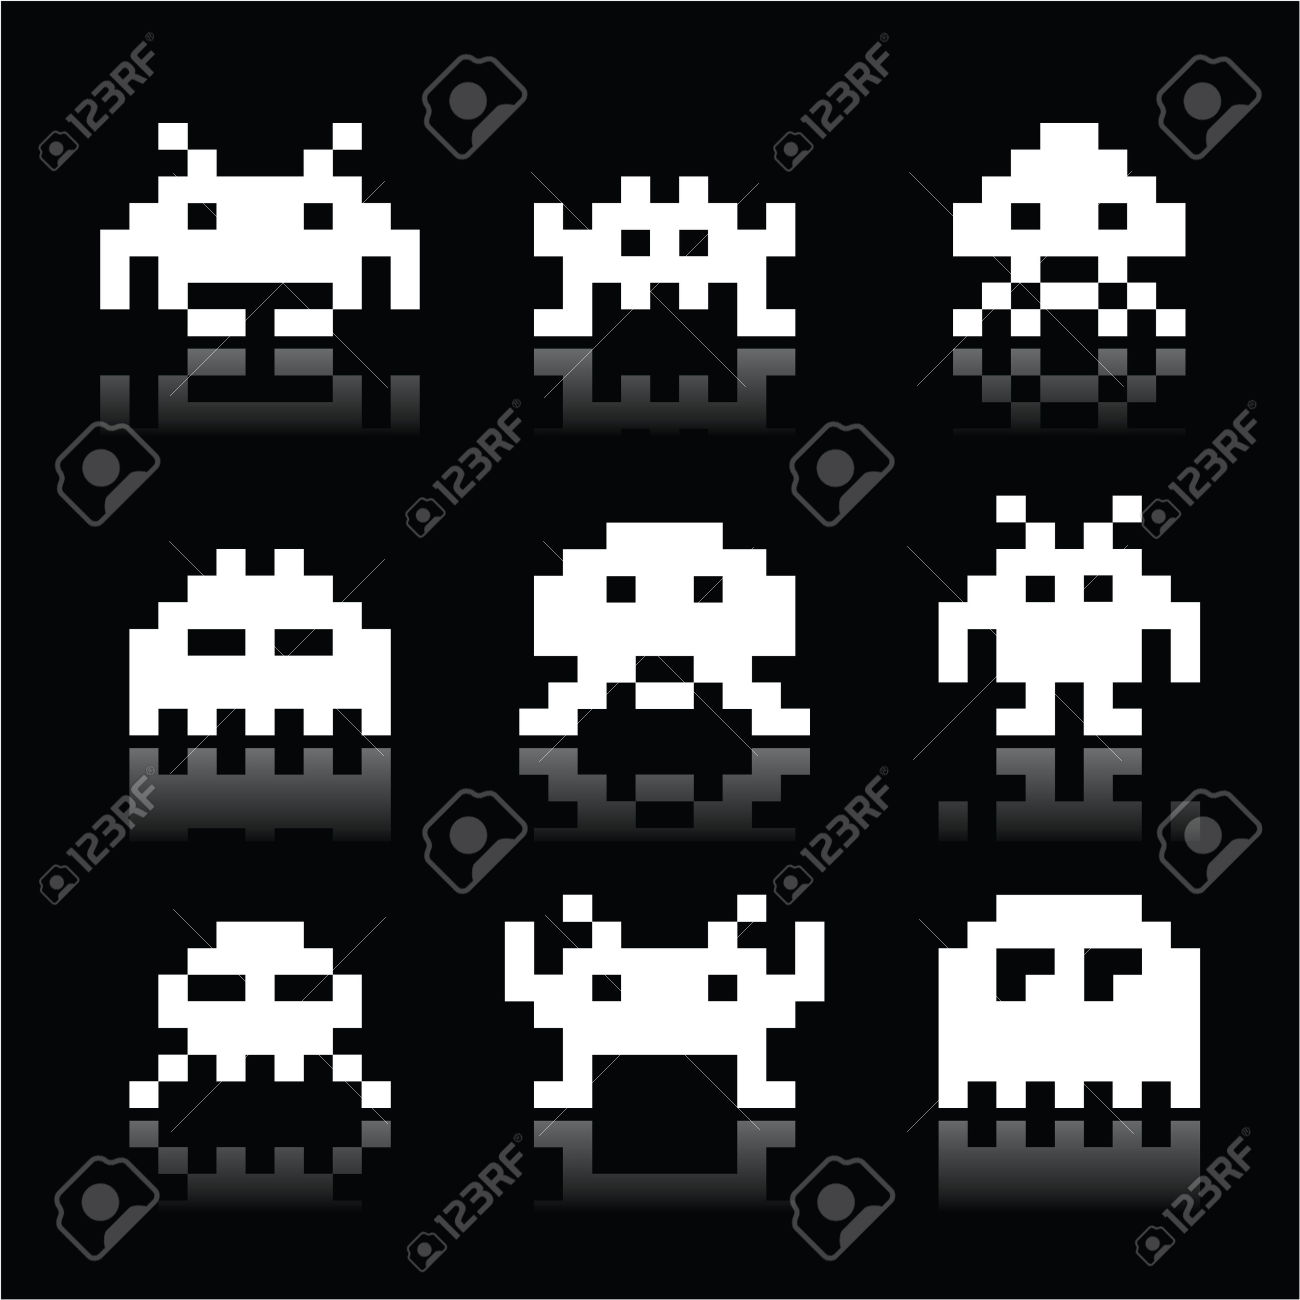 8-Bit Invaders! #8